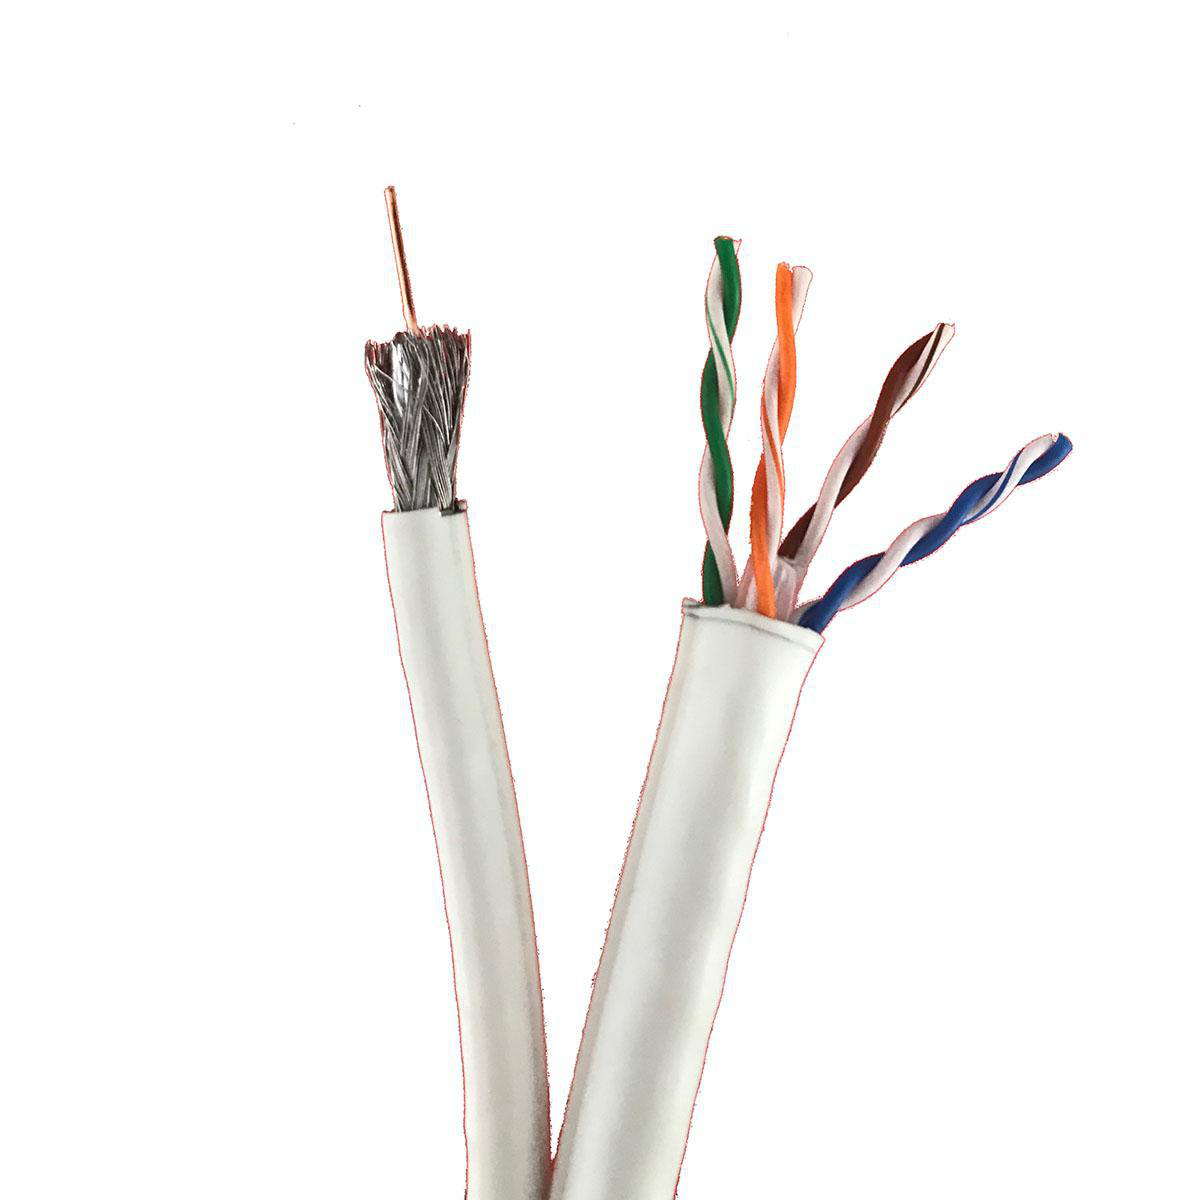 Cable category 6 U/UTP 4 pairs PVC Euroclass Eca 305 meters white, 632724, 3245066327242